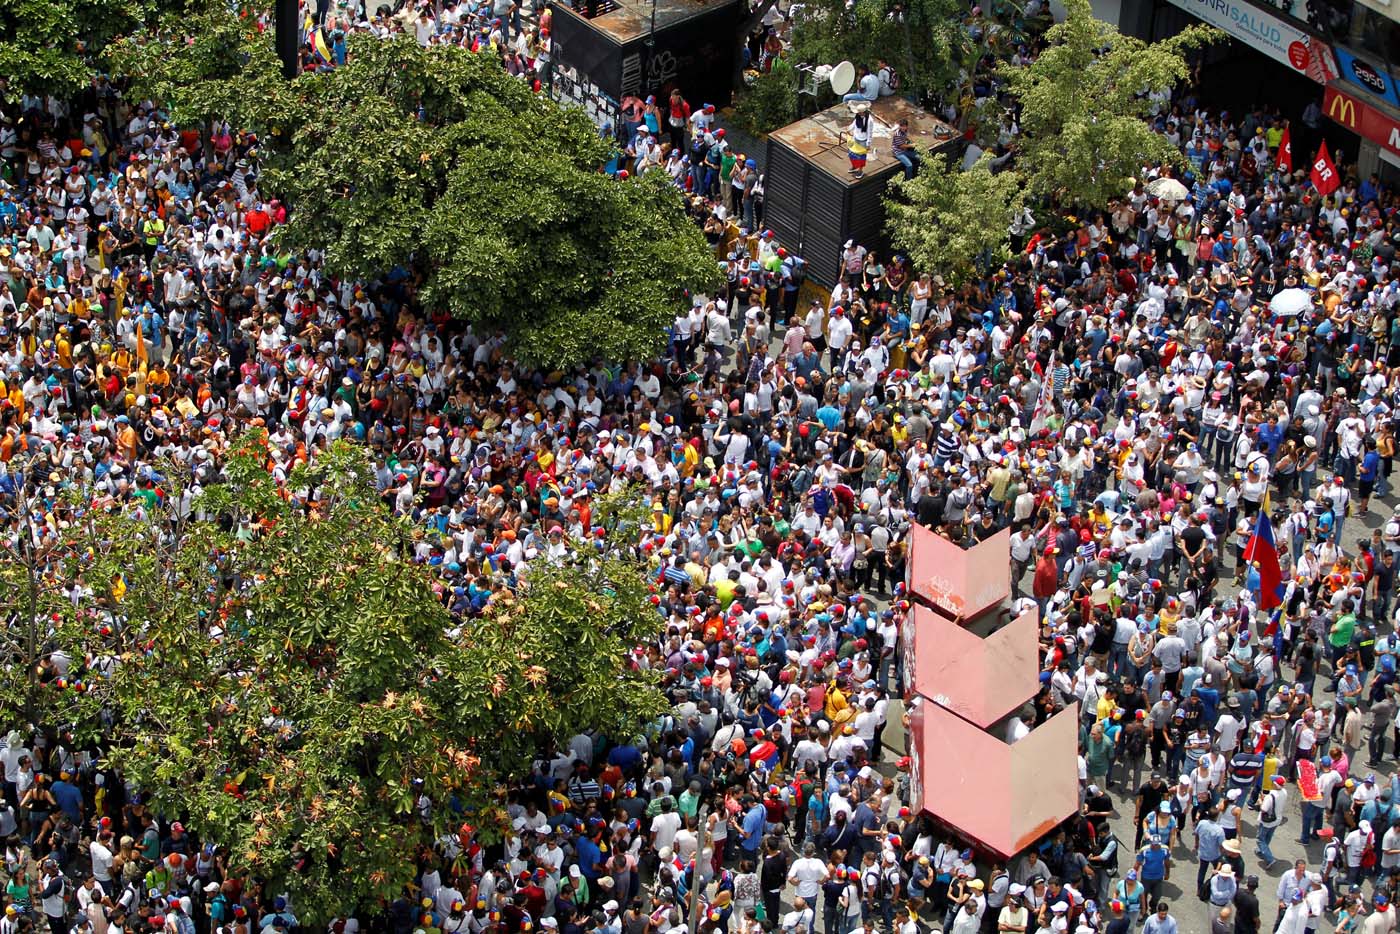 Demonstrators rally against Venezuela's President Nicolas Maduro's government in Caracas, Venezuela April 10, 2017. REUTERS/Christian Veron